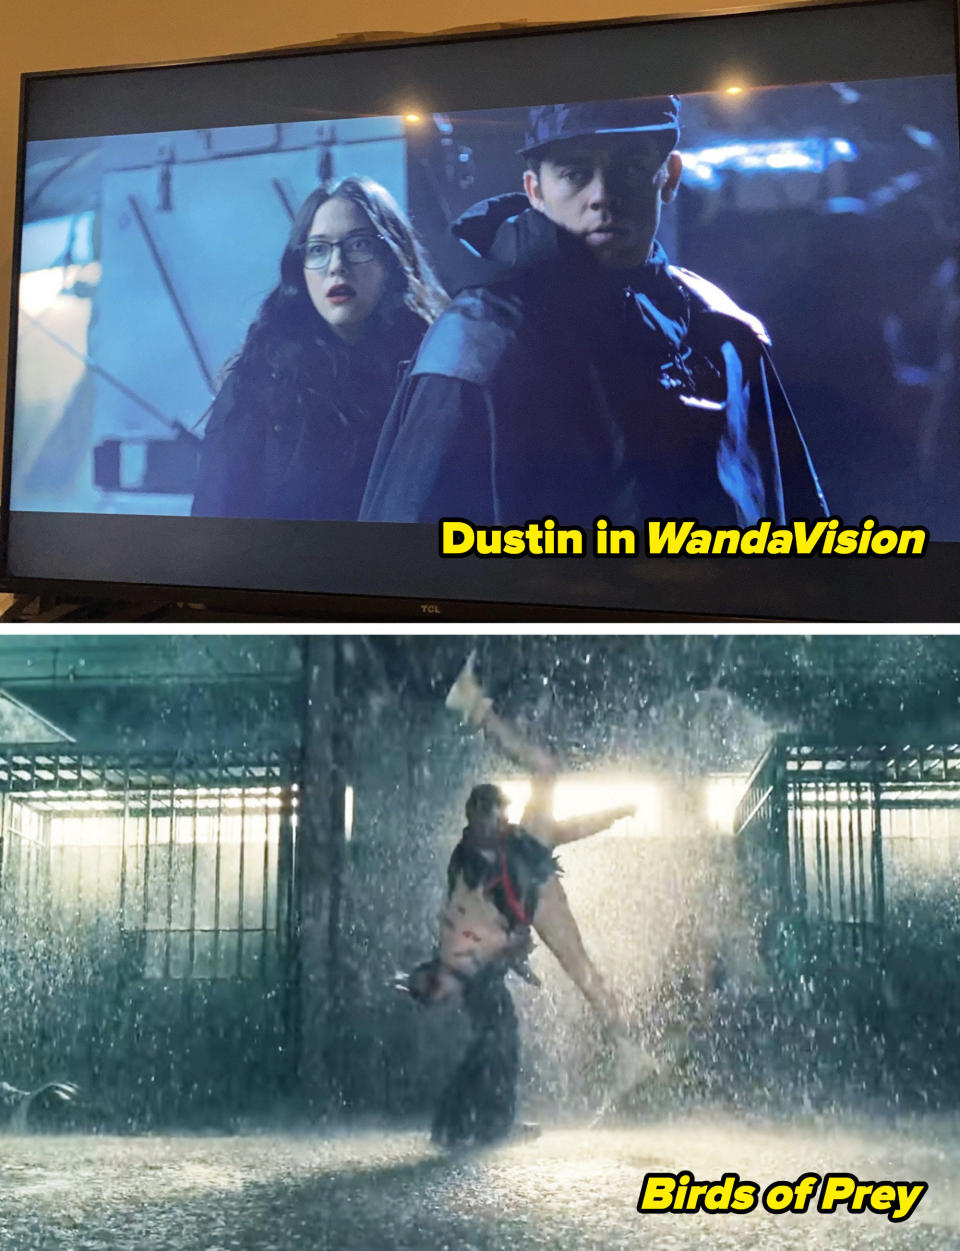 (top) kat dennings and stuntman dustin in "wandavisison" (bottom) "birds of prey" stunt scene